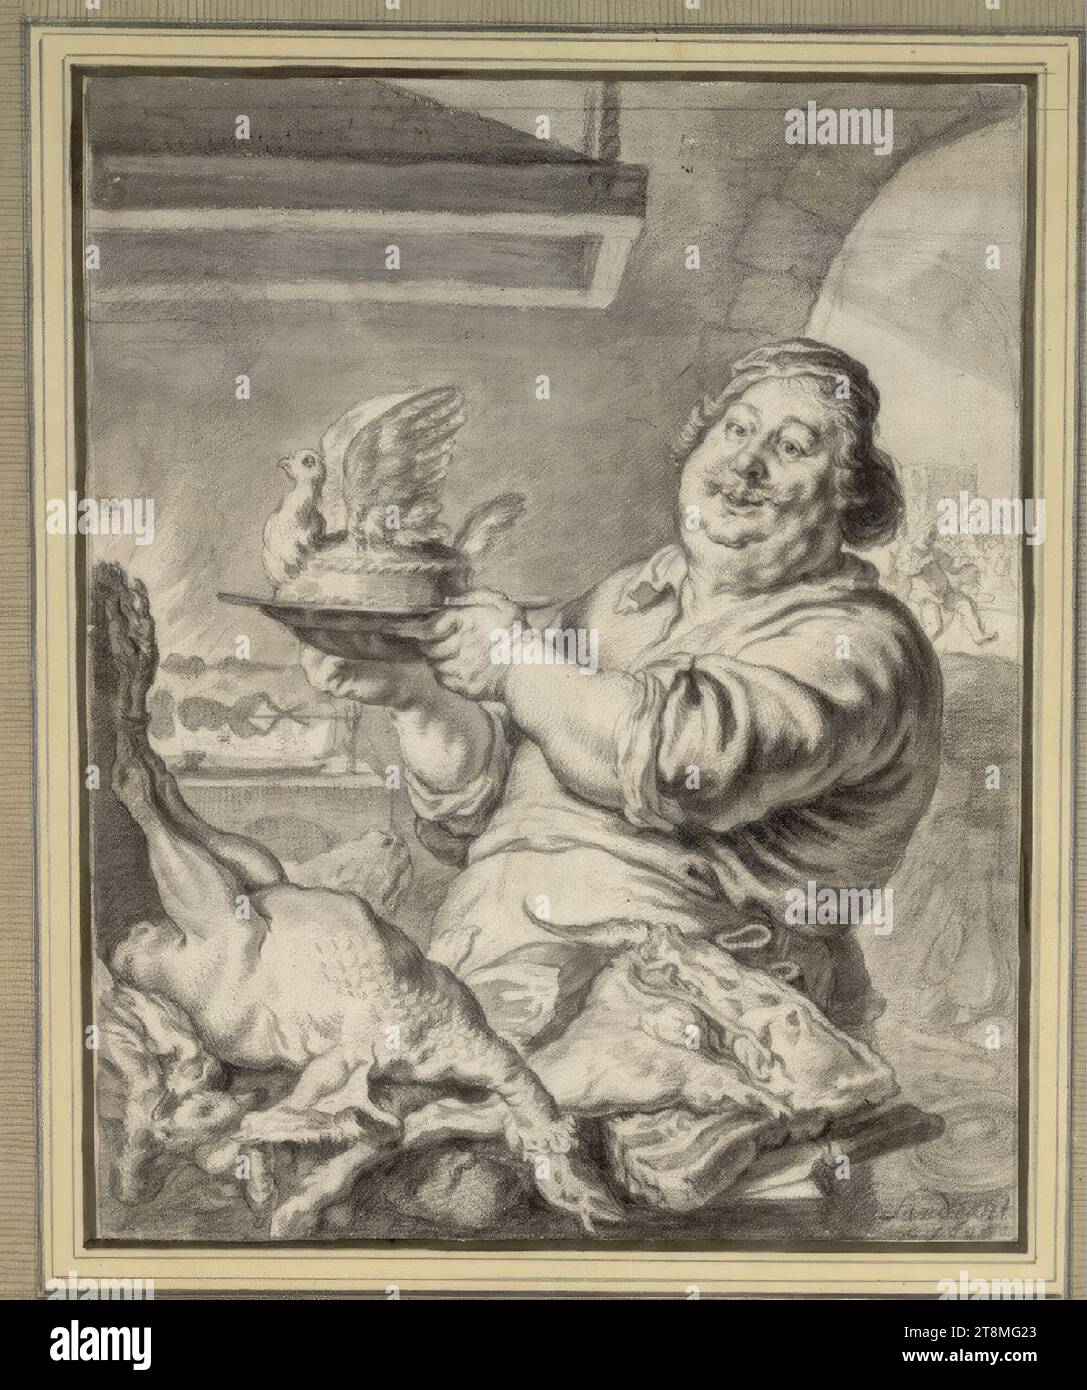 February, Joachim von Sandrart d. Ä. (Frankfurt am Main 1606 - 1688 Nuremberg), 1644, drawing, stone chalk with gray washes, 30.1 x 24 cm, l. and Duke Albert of Saxe-Teschen Stock Photo